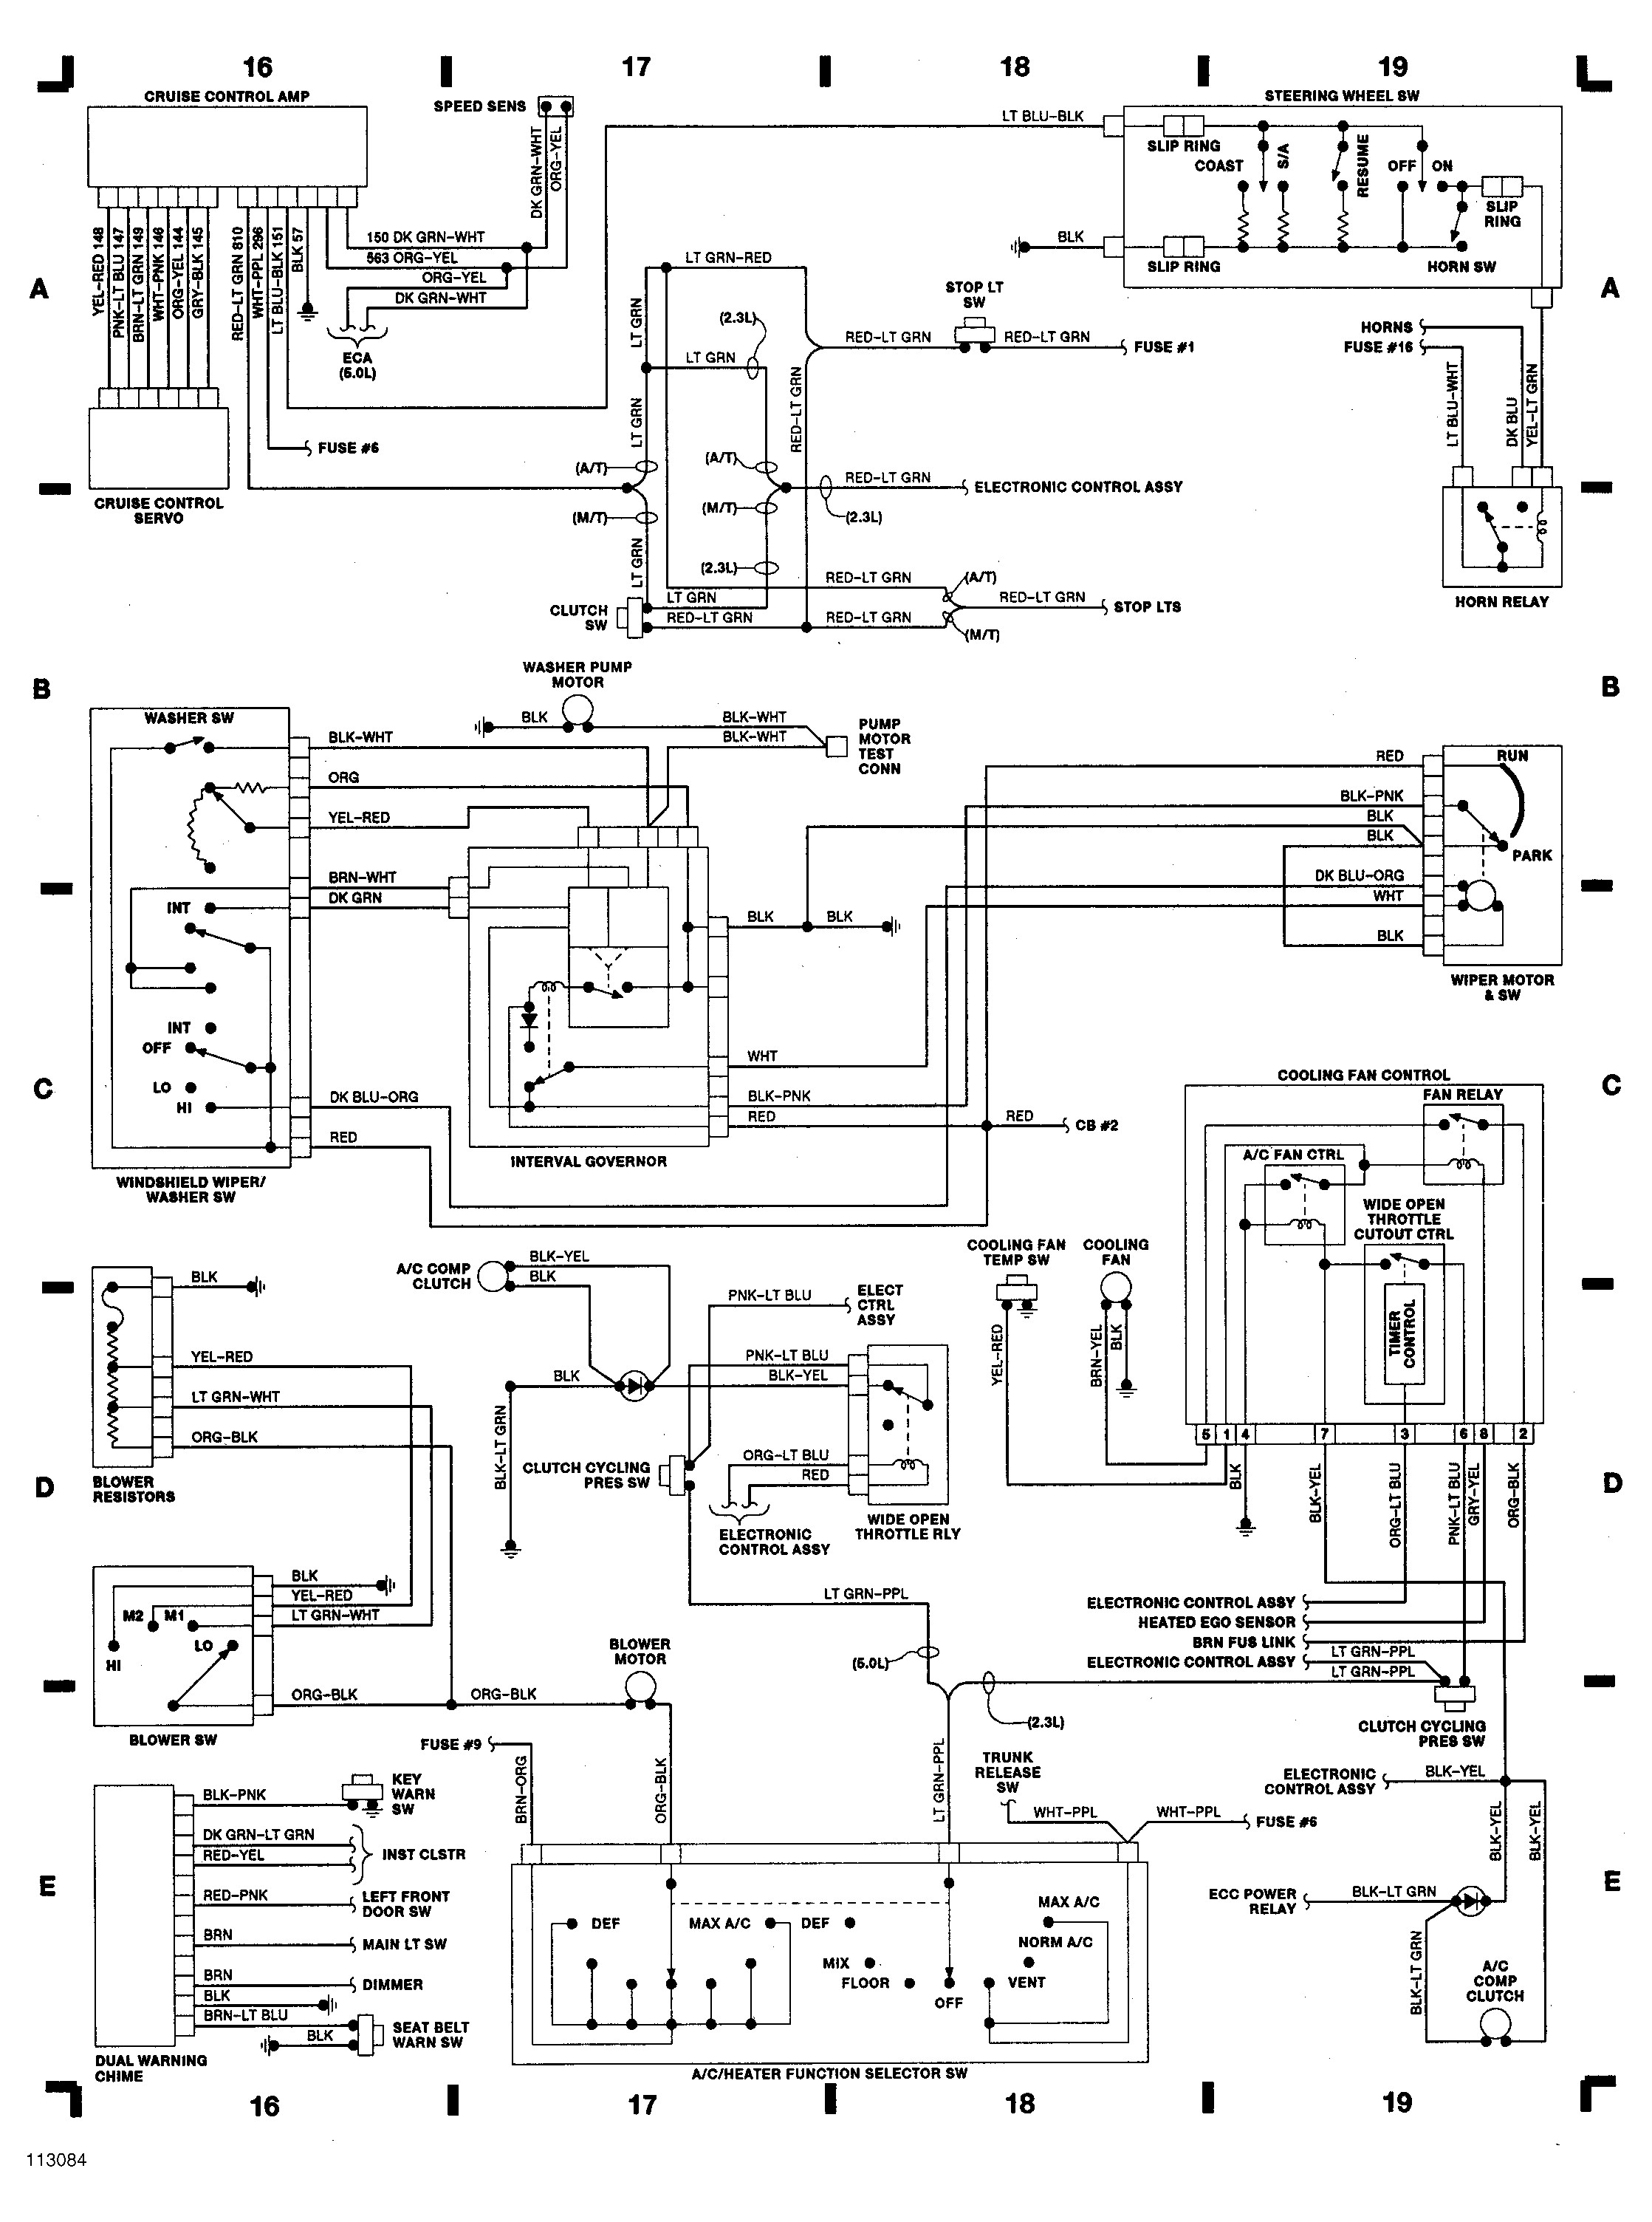 1990 Ford Alternator Wiring Diagram from detoxicrecenze.com